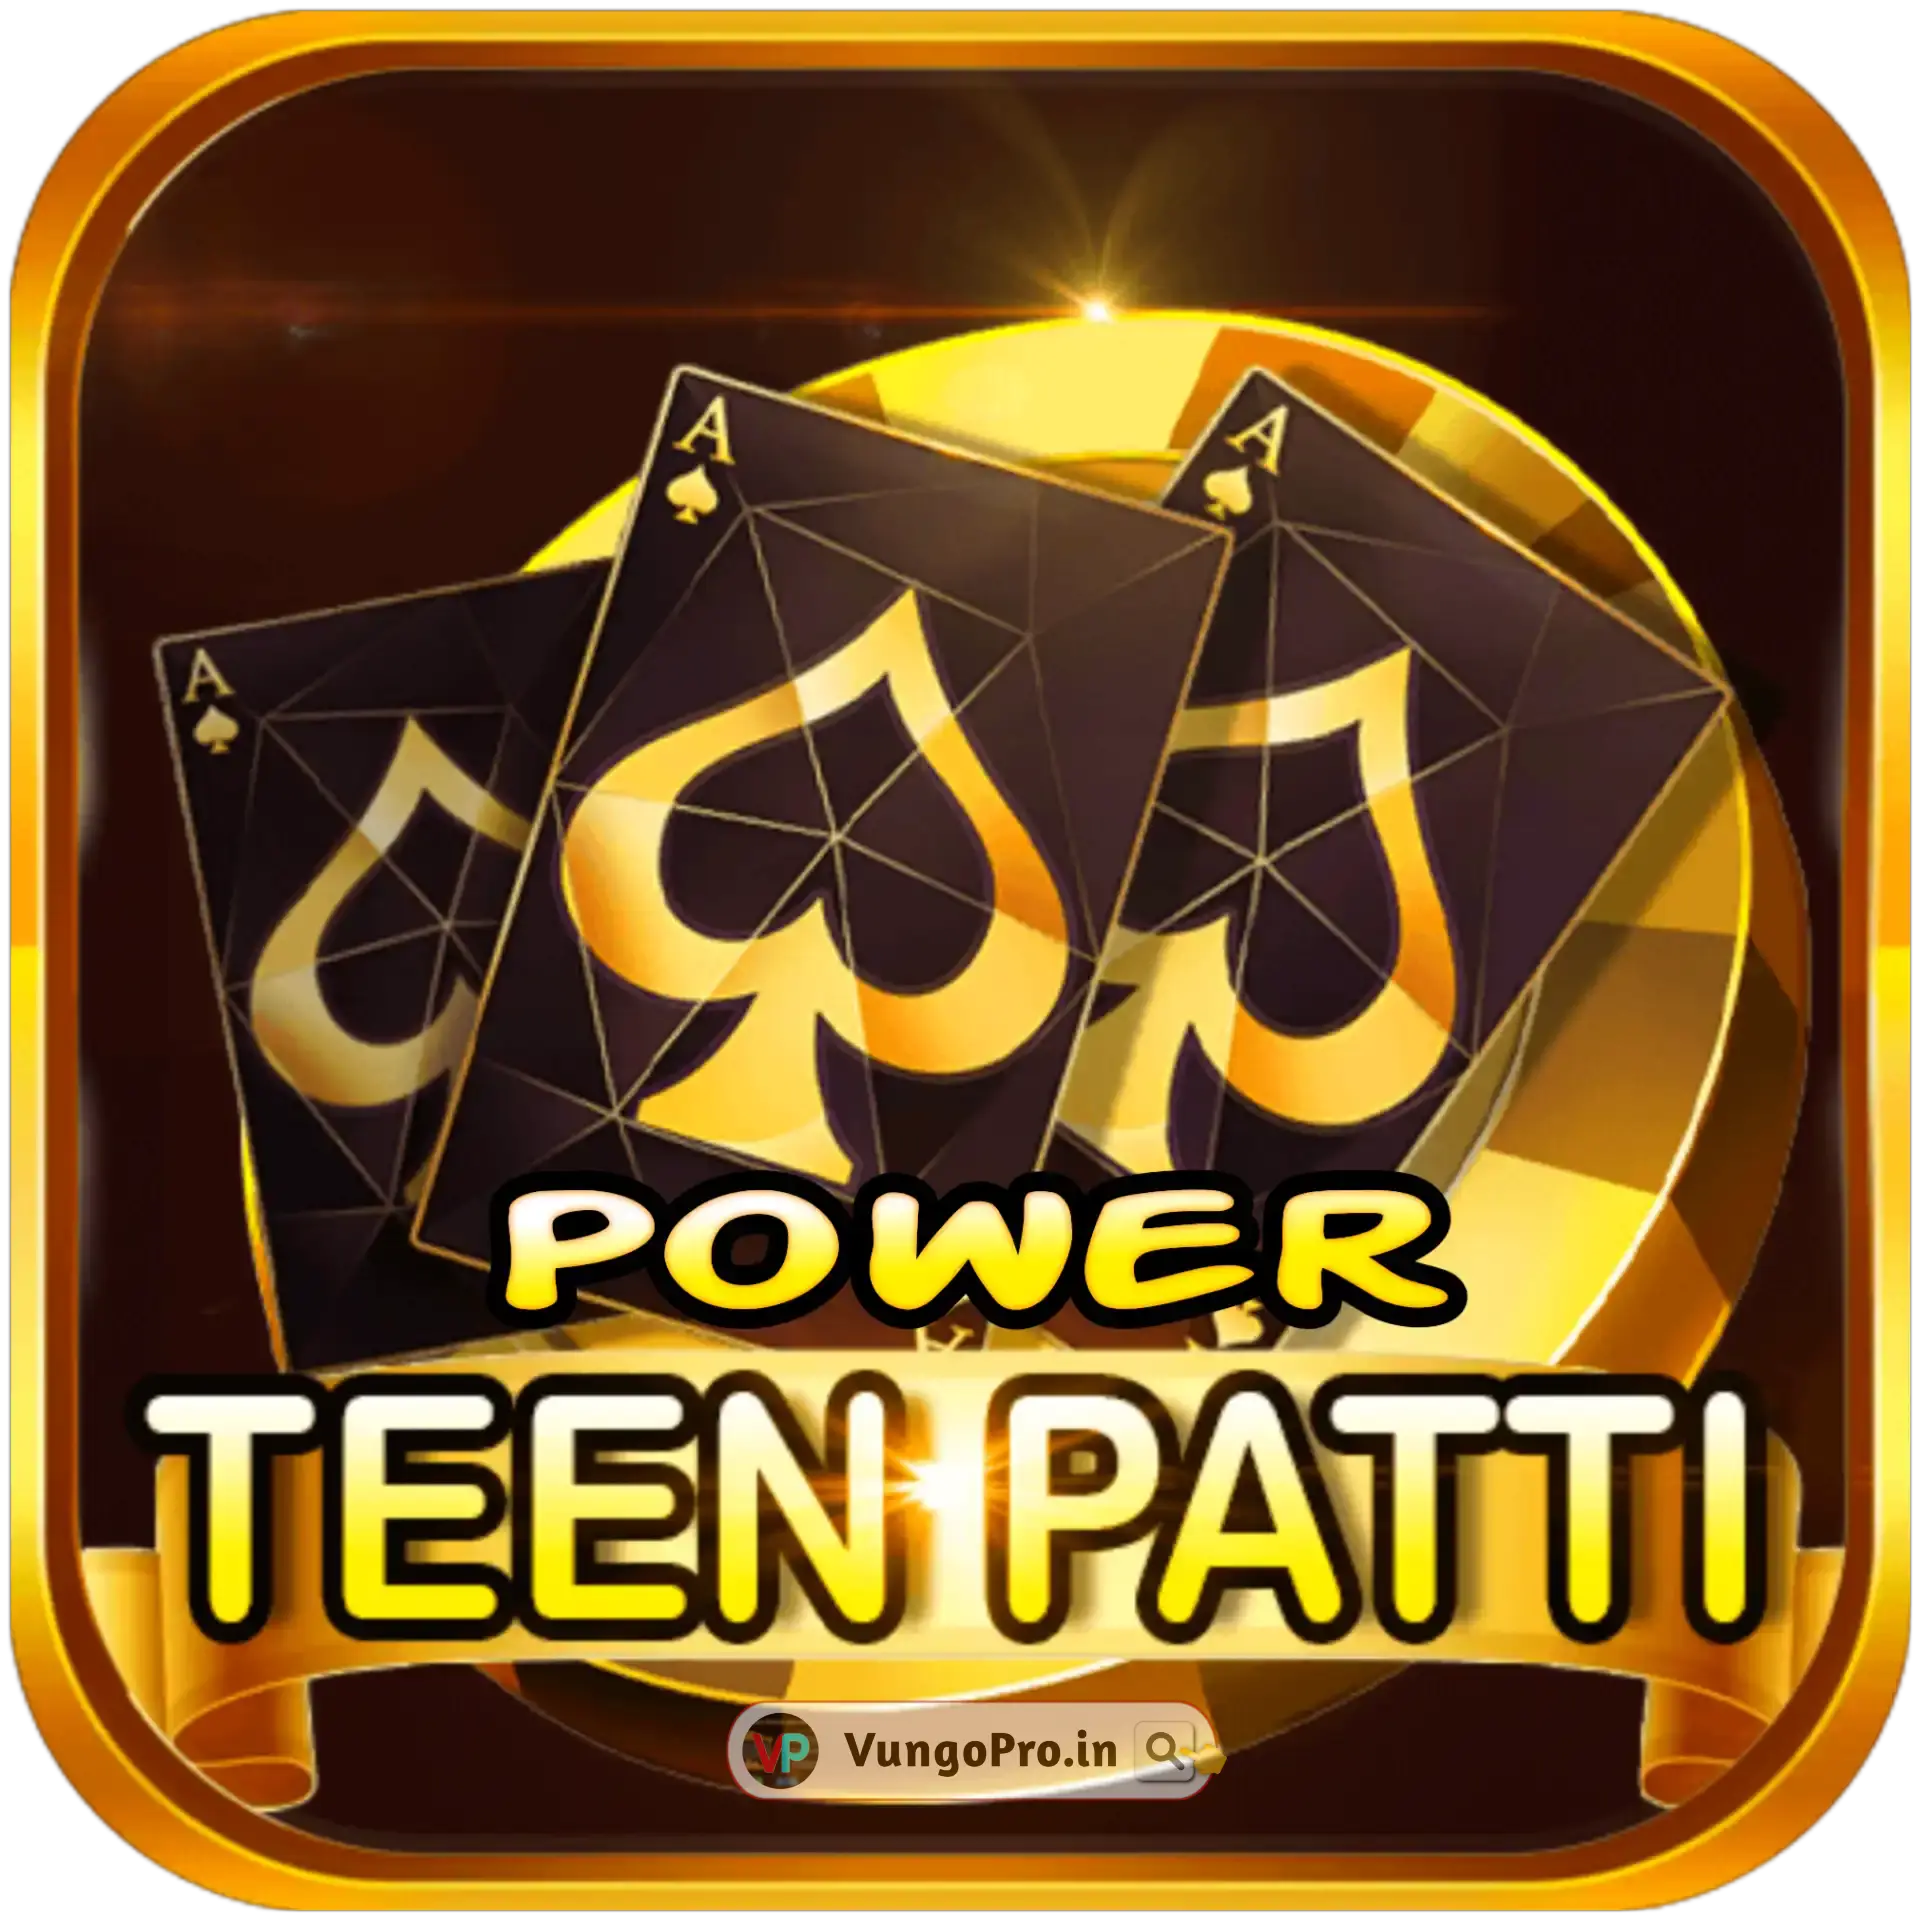 TeenPatti Power